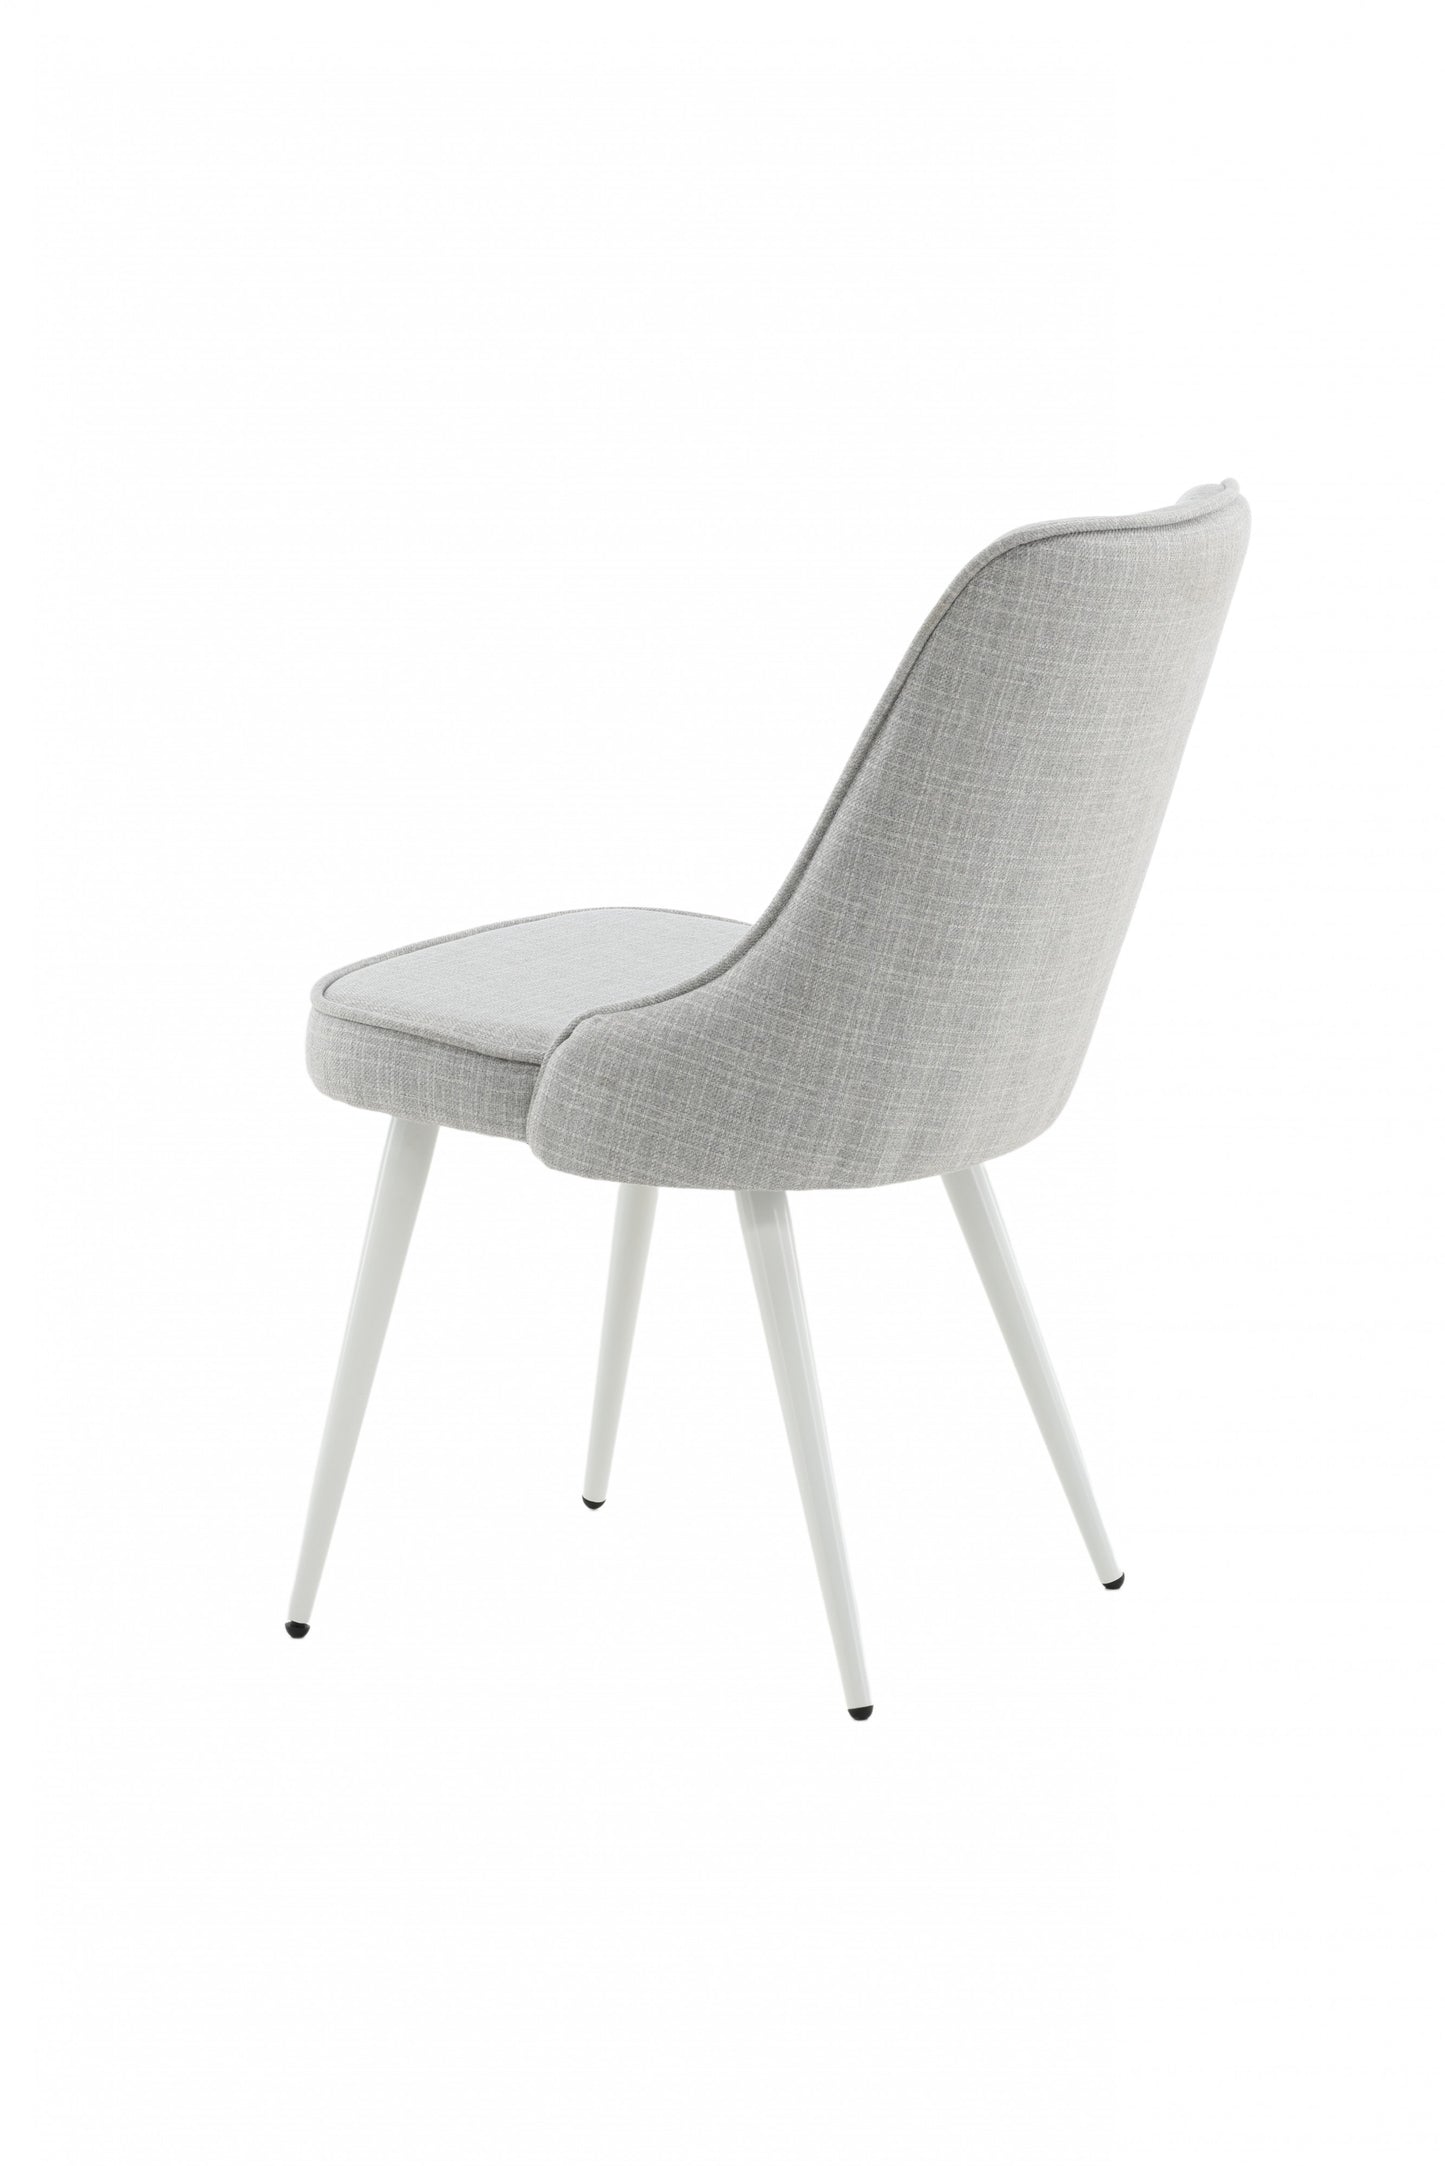 Velour Deluxe Spisebordsstol - Hvide ben - Lysegråt stof